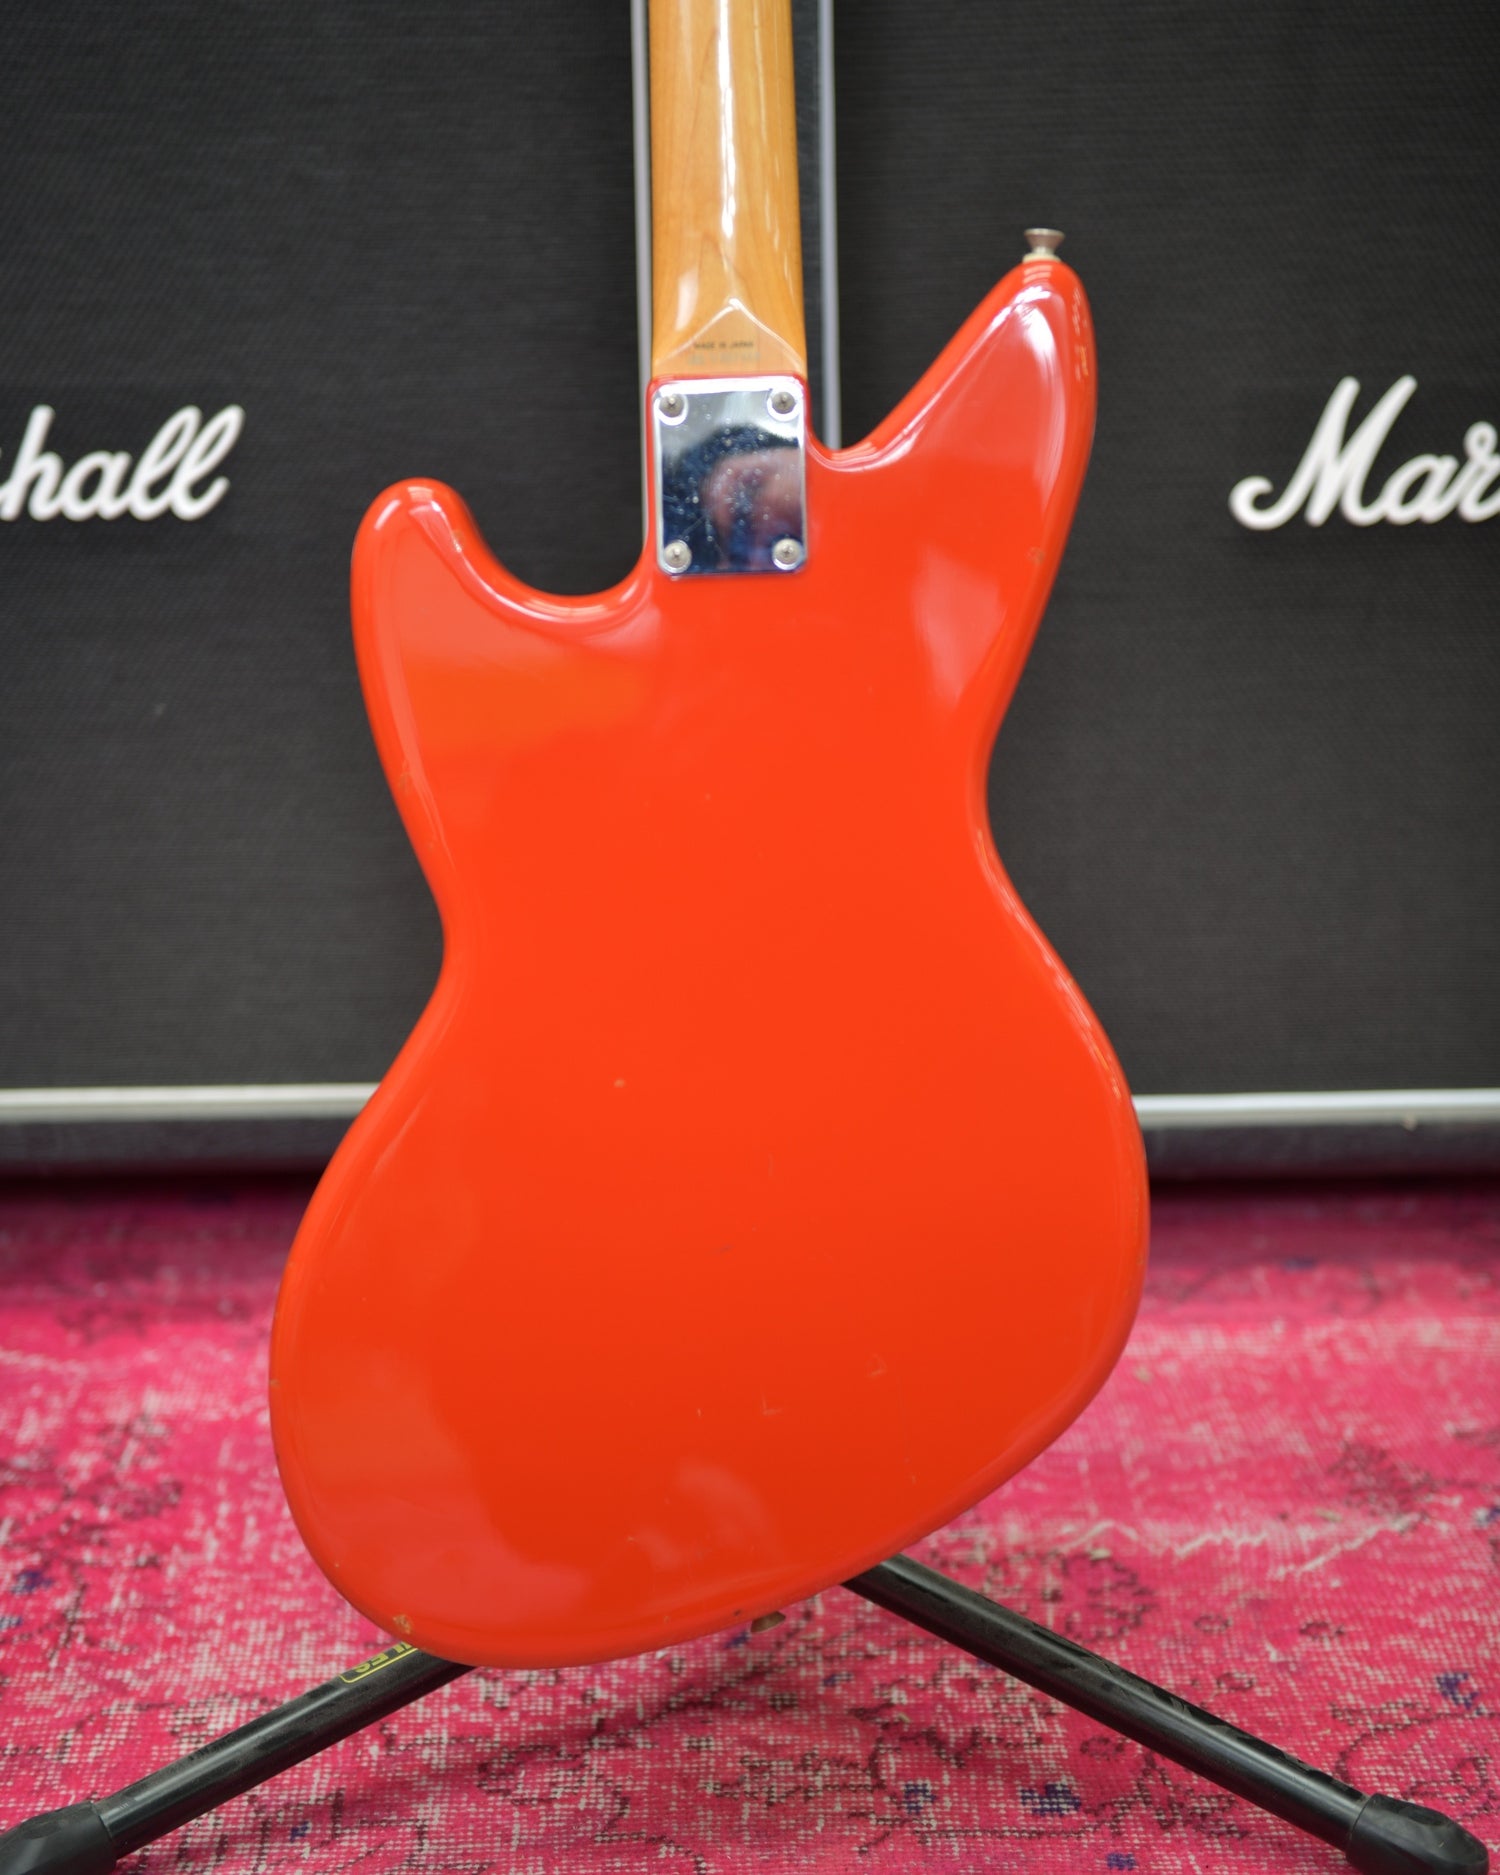 Fender Jagstang Kurt Cobain Signature Fiesta Red MIJ 1996